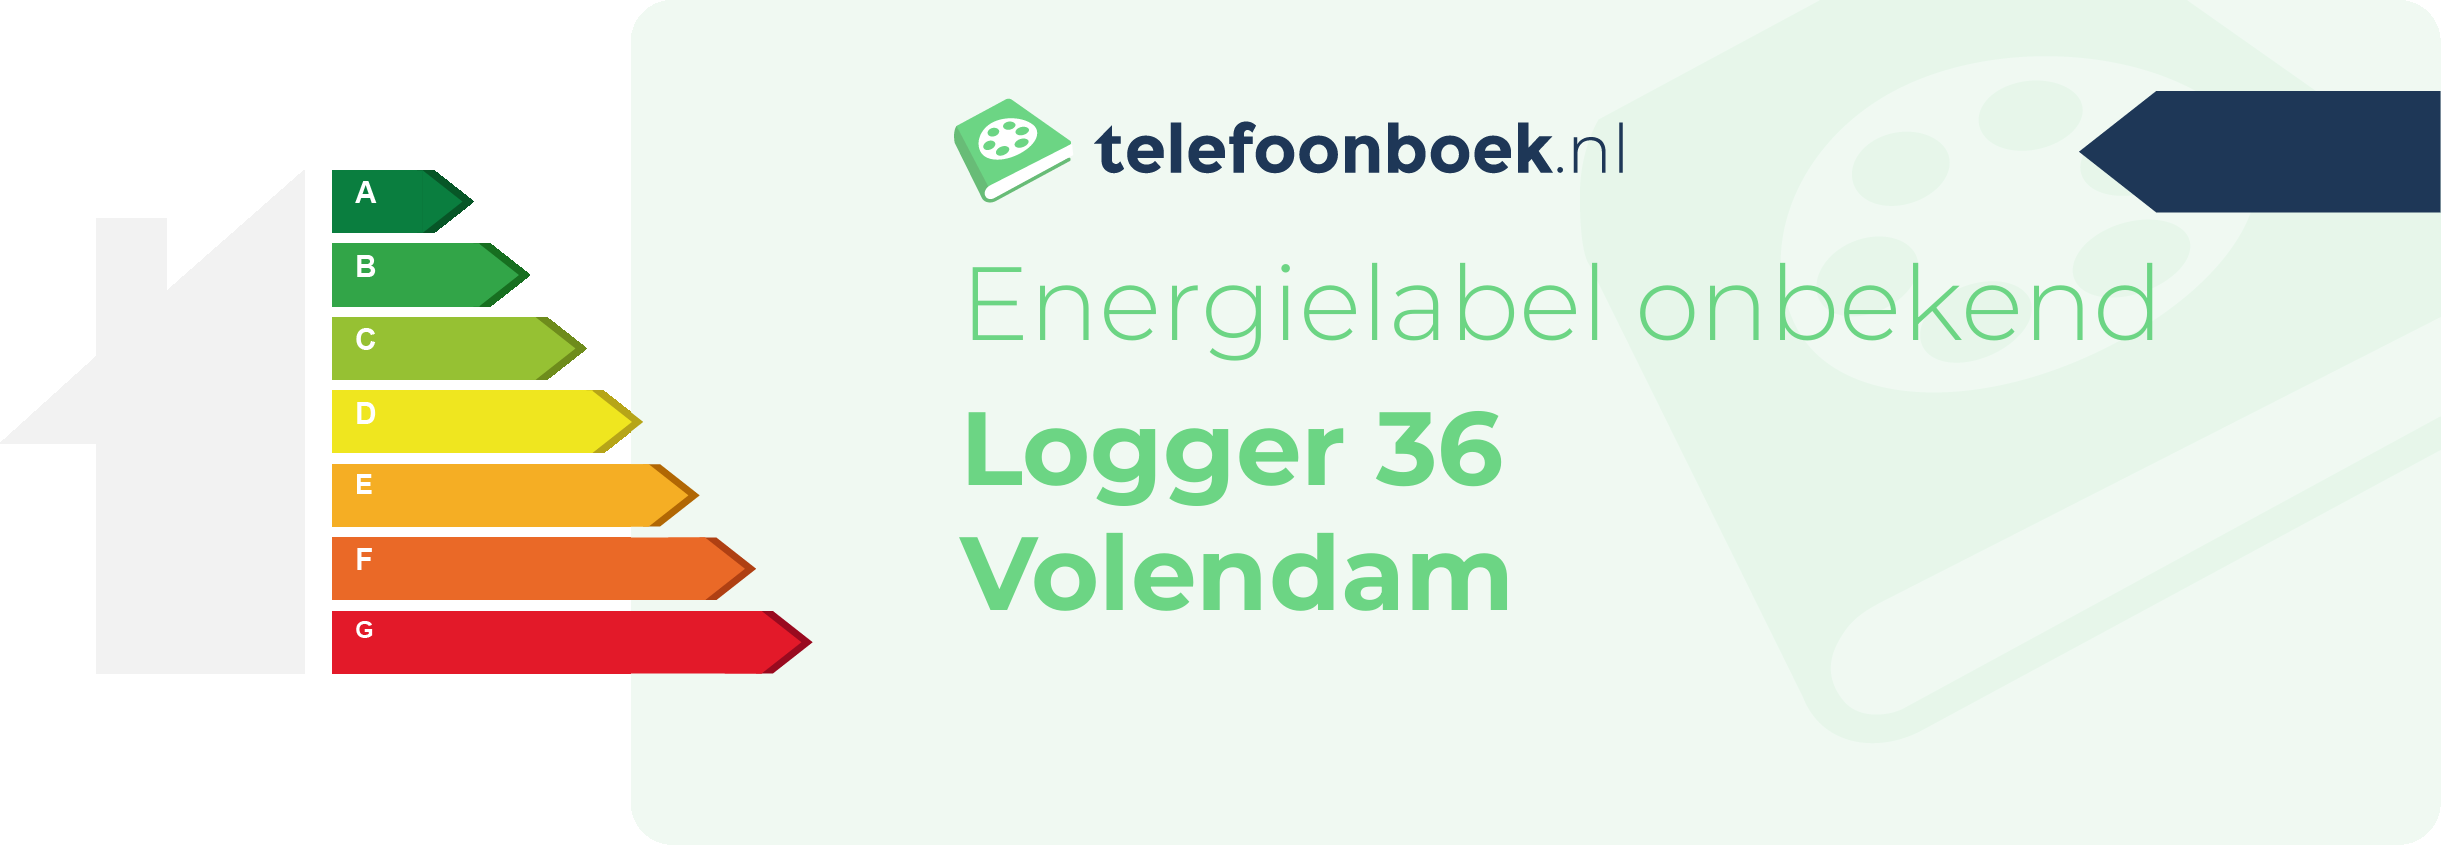 Energielabel Logger 36 Volendam